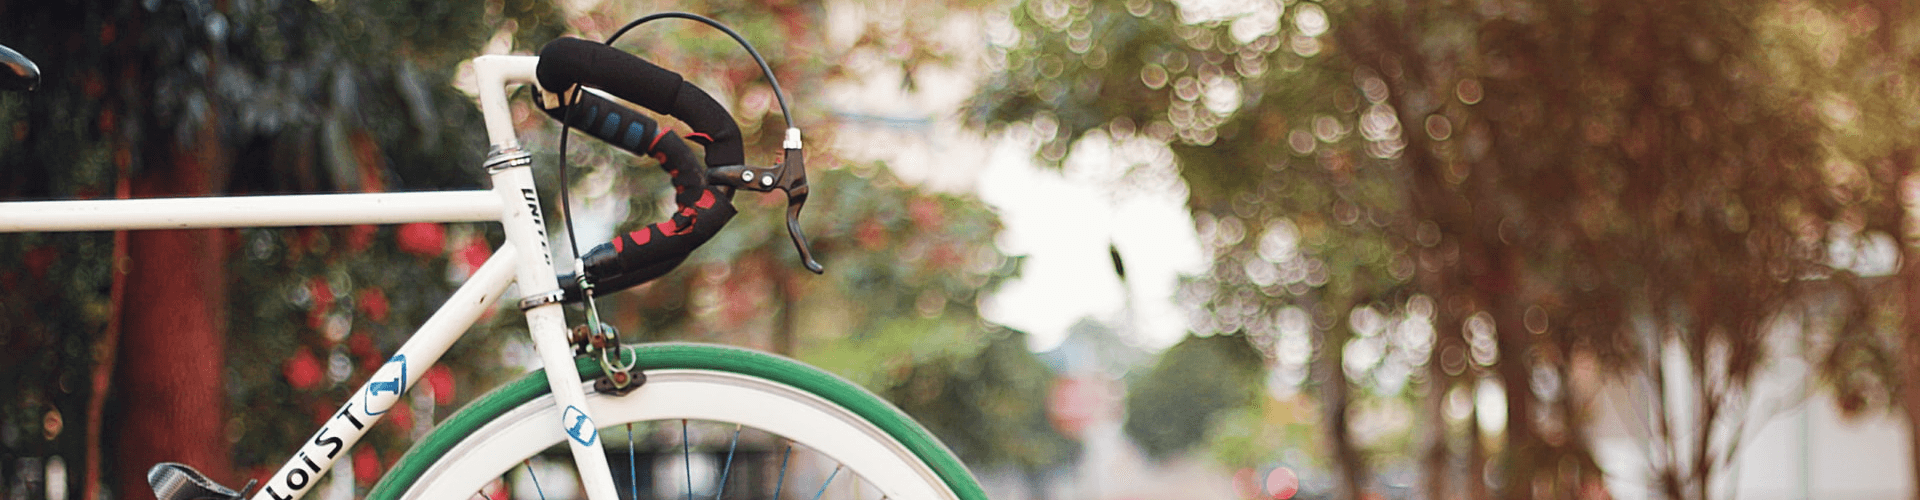 Recht op letselschadevergoeding na een fietsongeluk? | Letselschadebureau LetselPro